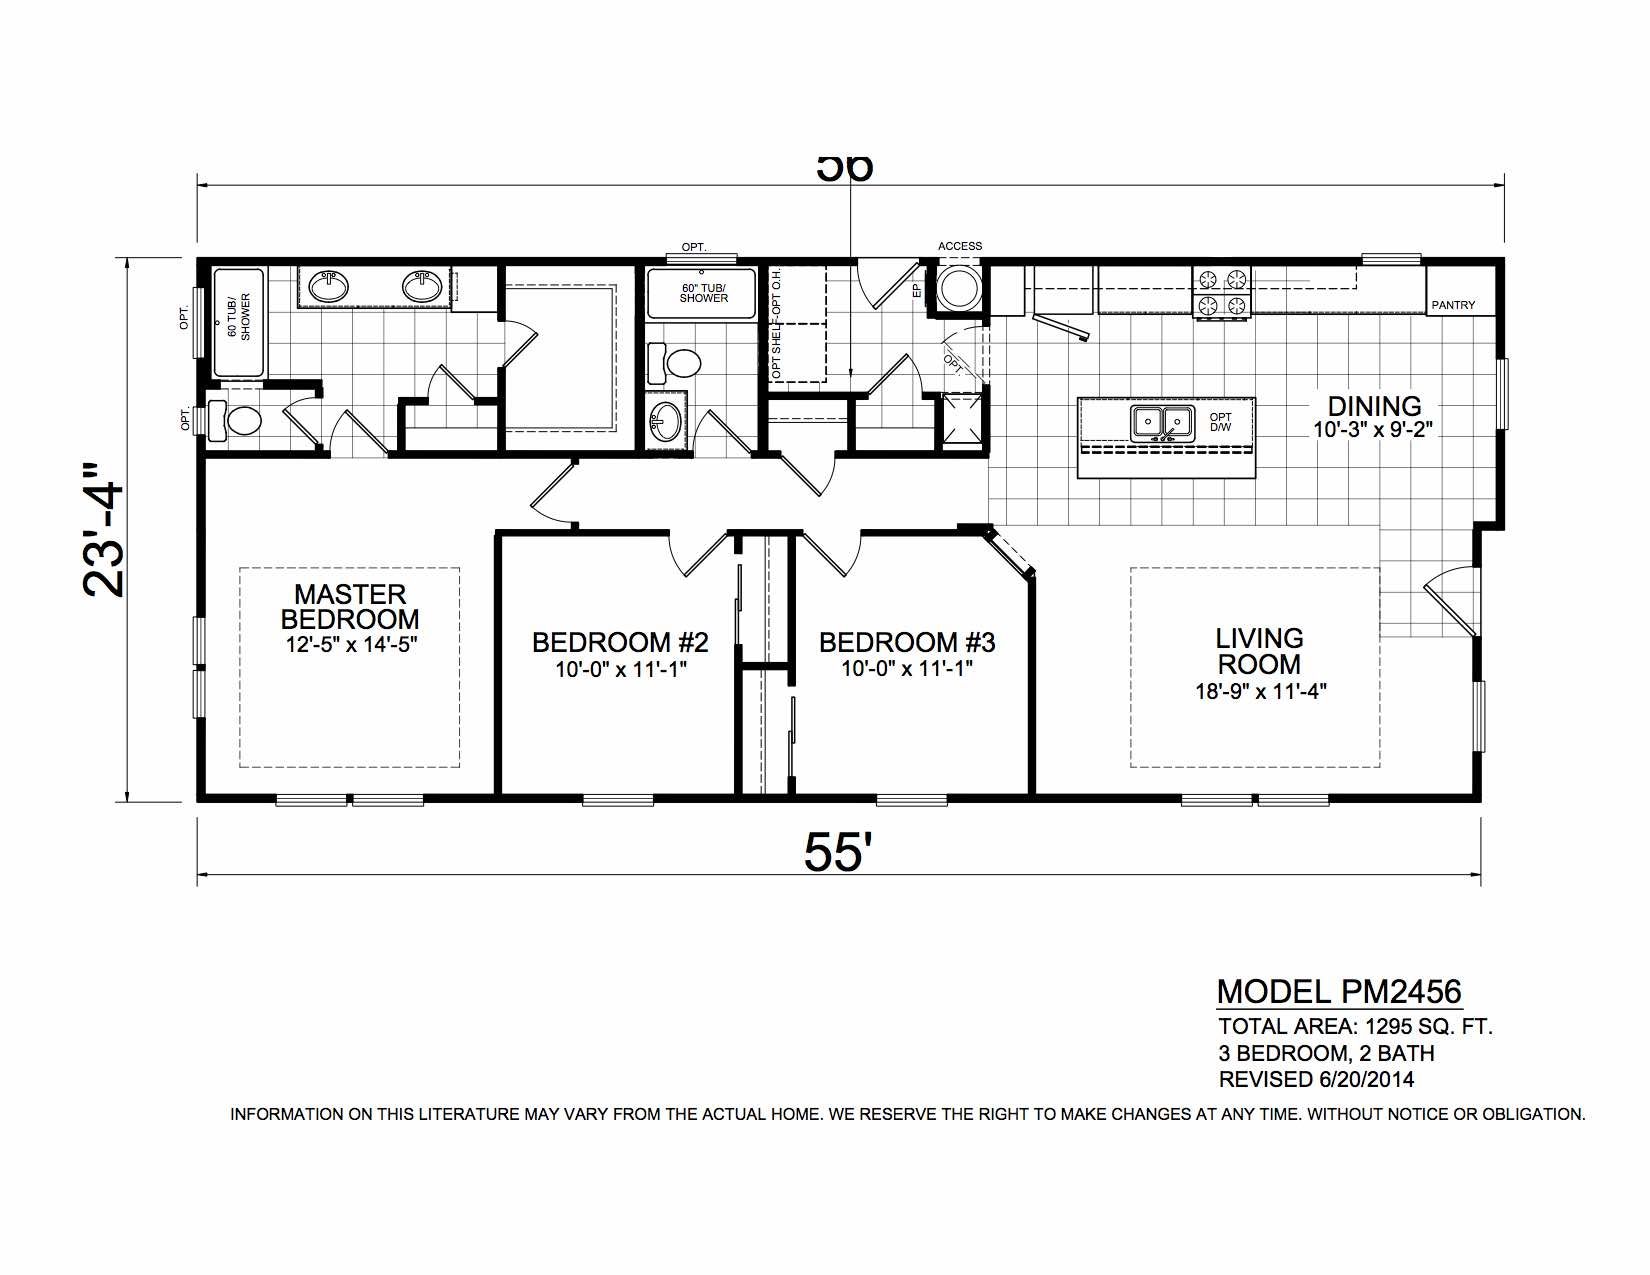 Homes Direct Modular Homes - Model PM2456 - Floorplan